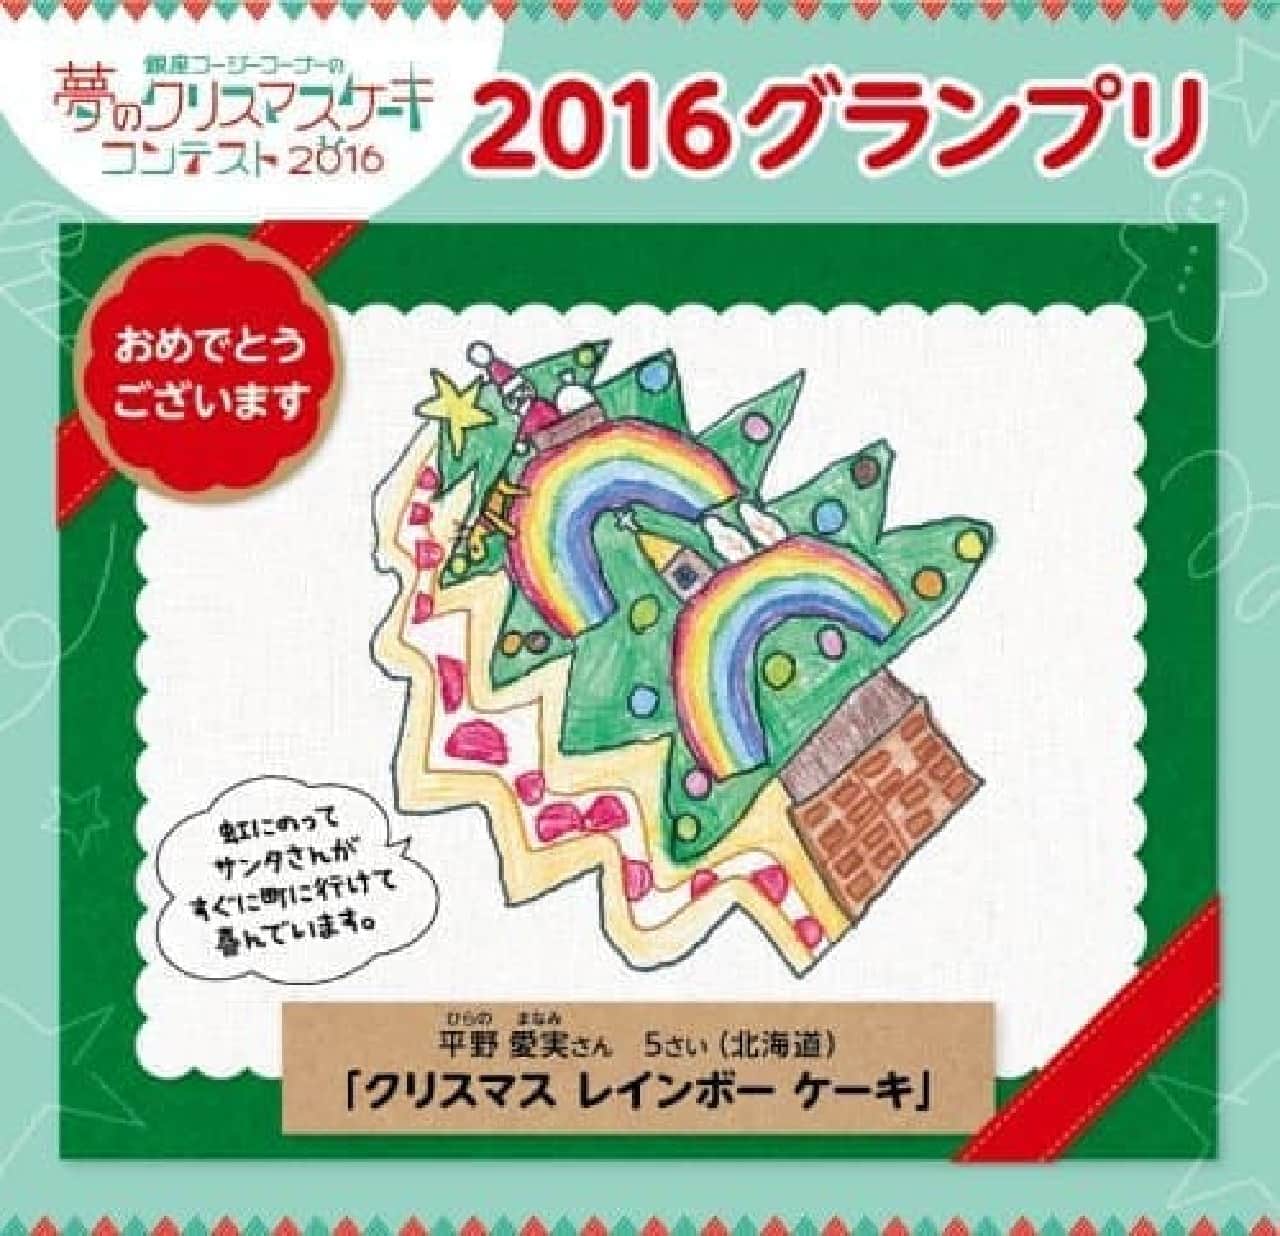 Ginza Cozy Corner "Dream Christmas Cake Contest"